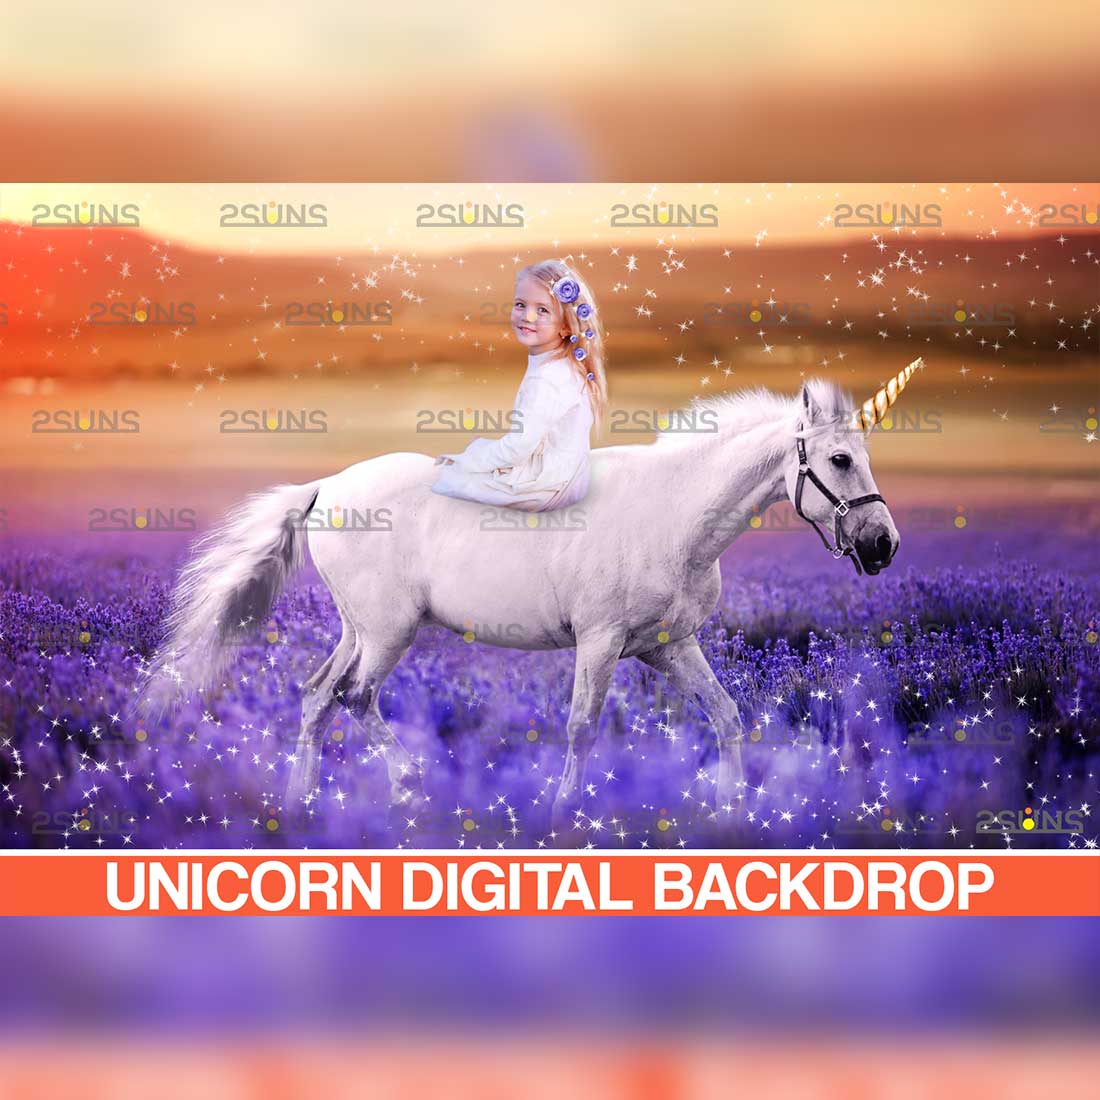 Unicorn Floral Digital Backdrop Background Cover Image.